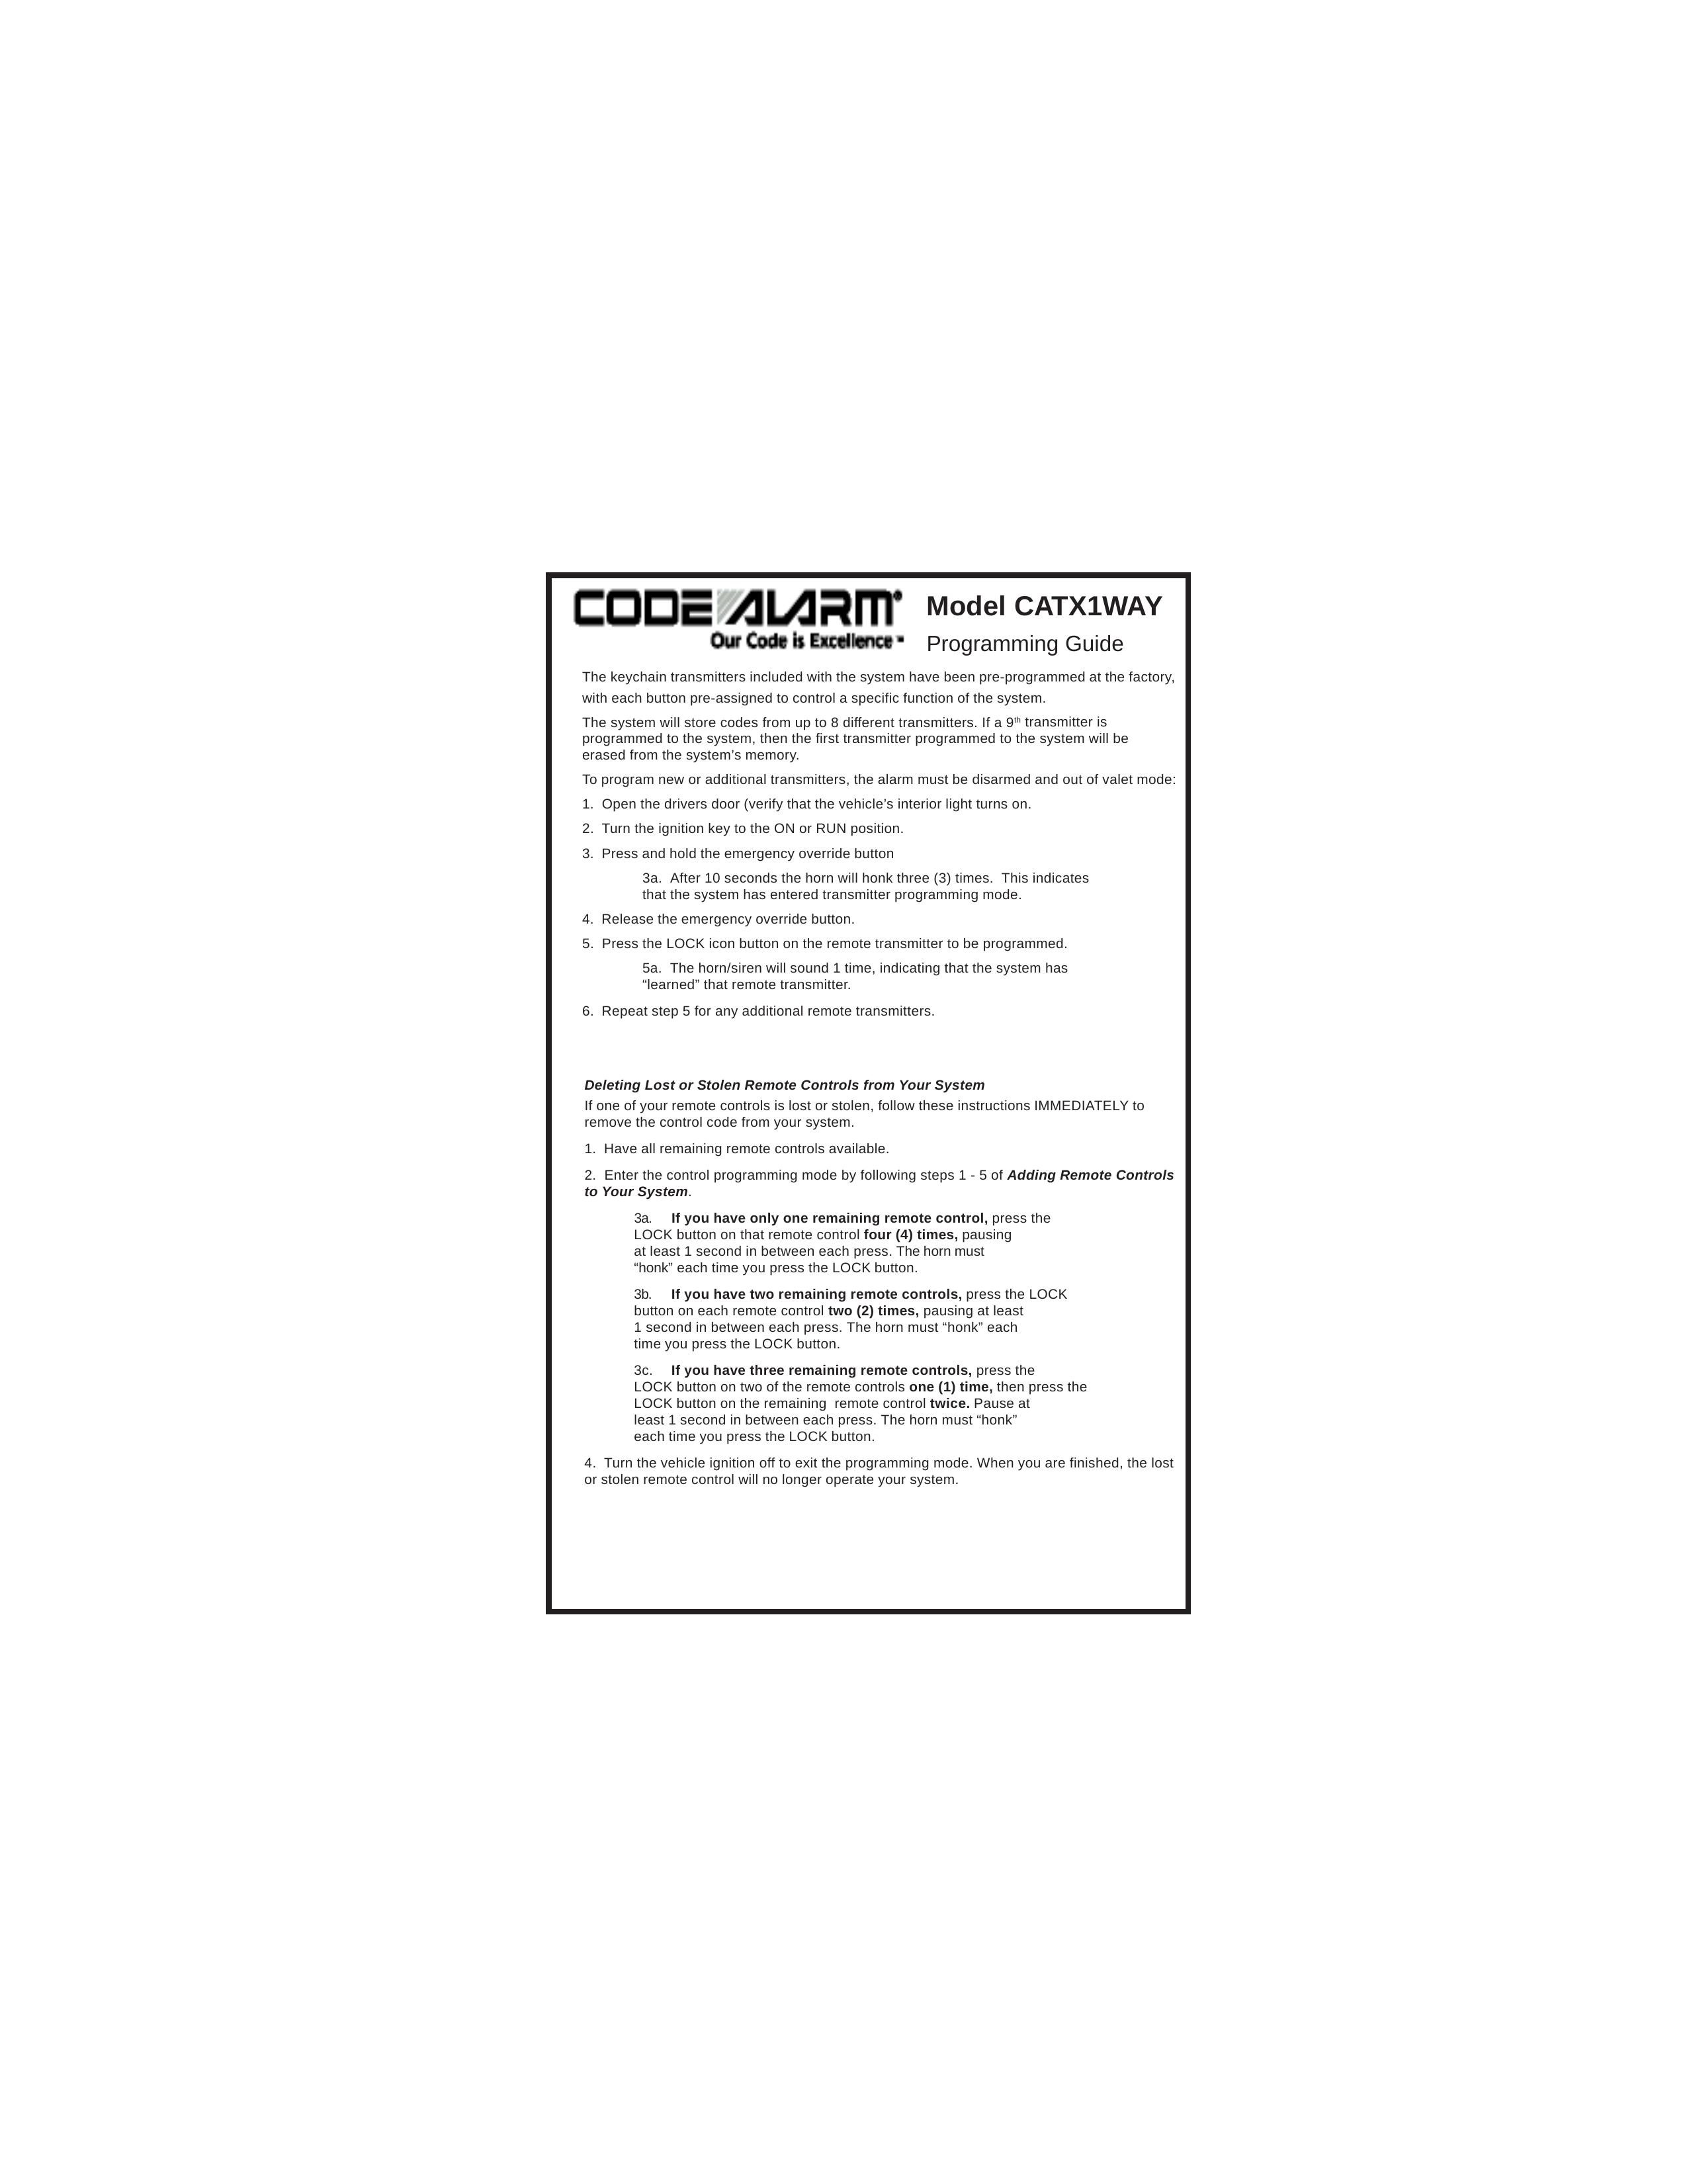 Code Alarm CATX1WAY Digital Photo Keychain User Manual